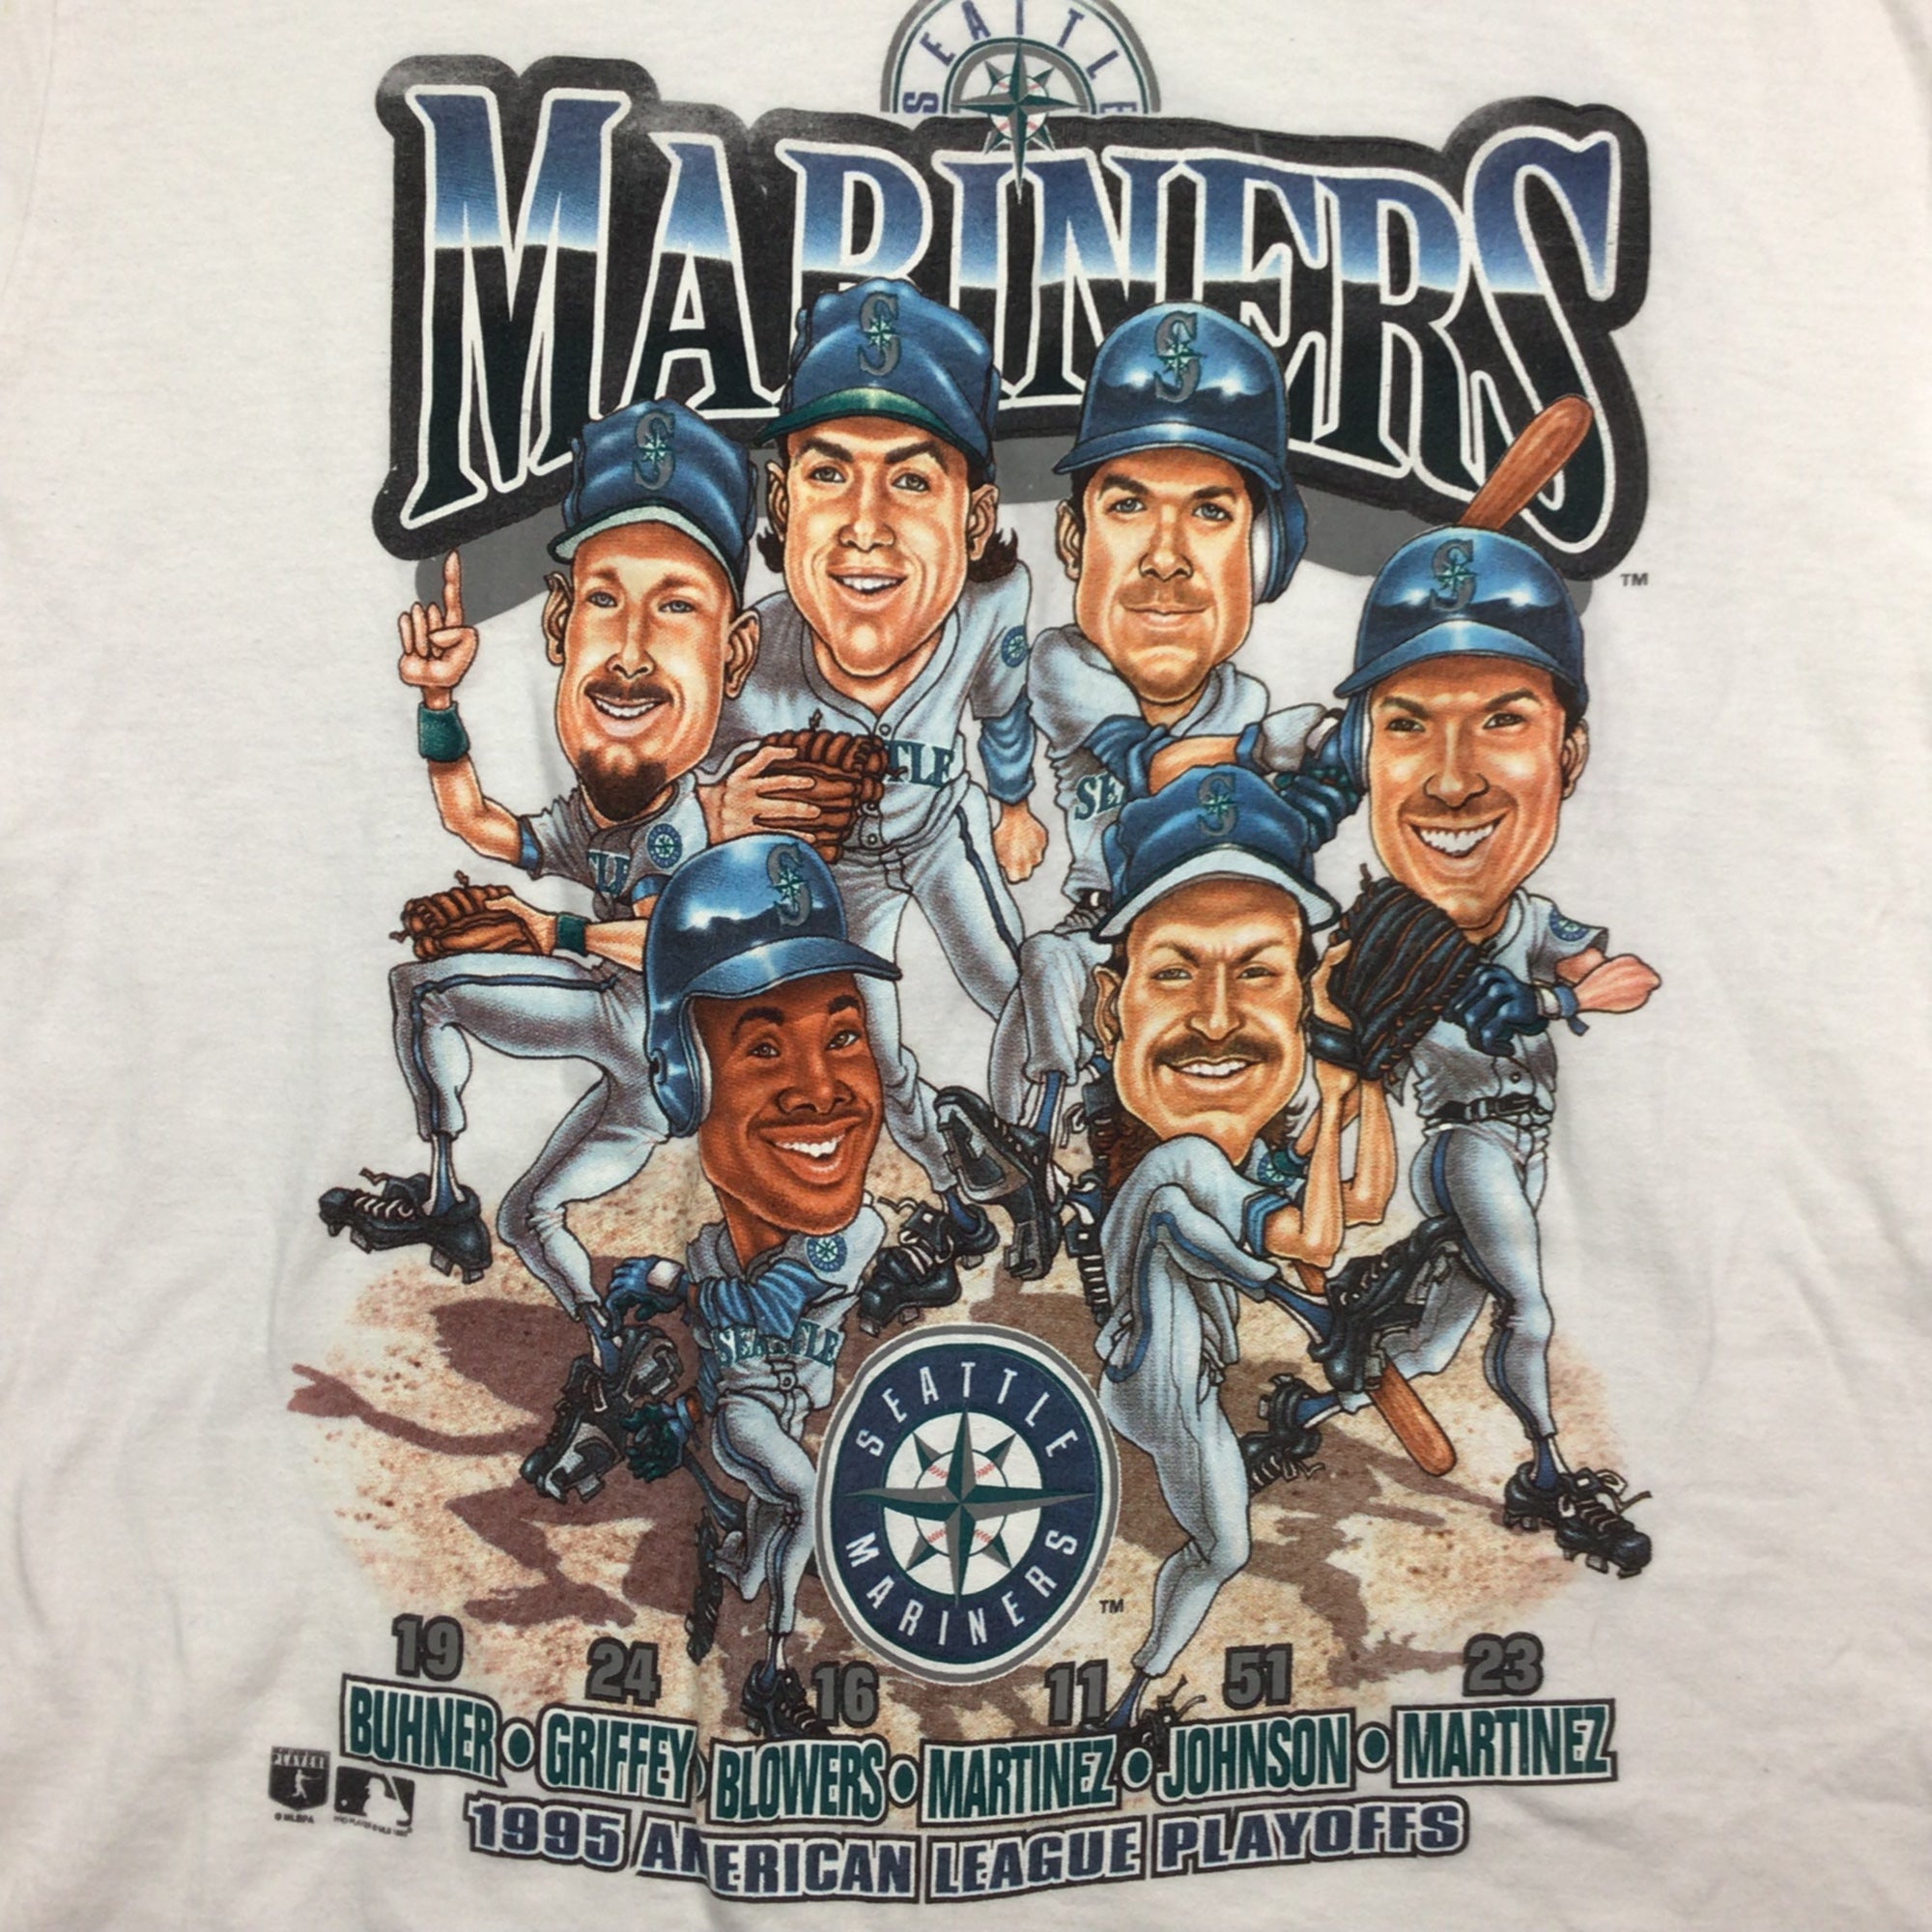 Vintage MLB - Seattle Mariners Randy Ken Alex Single Stitch T